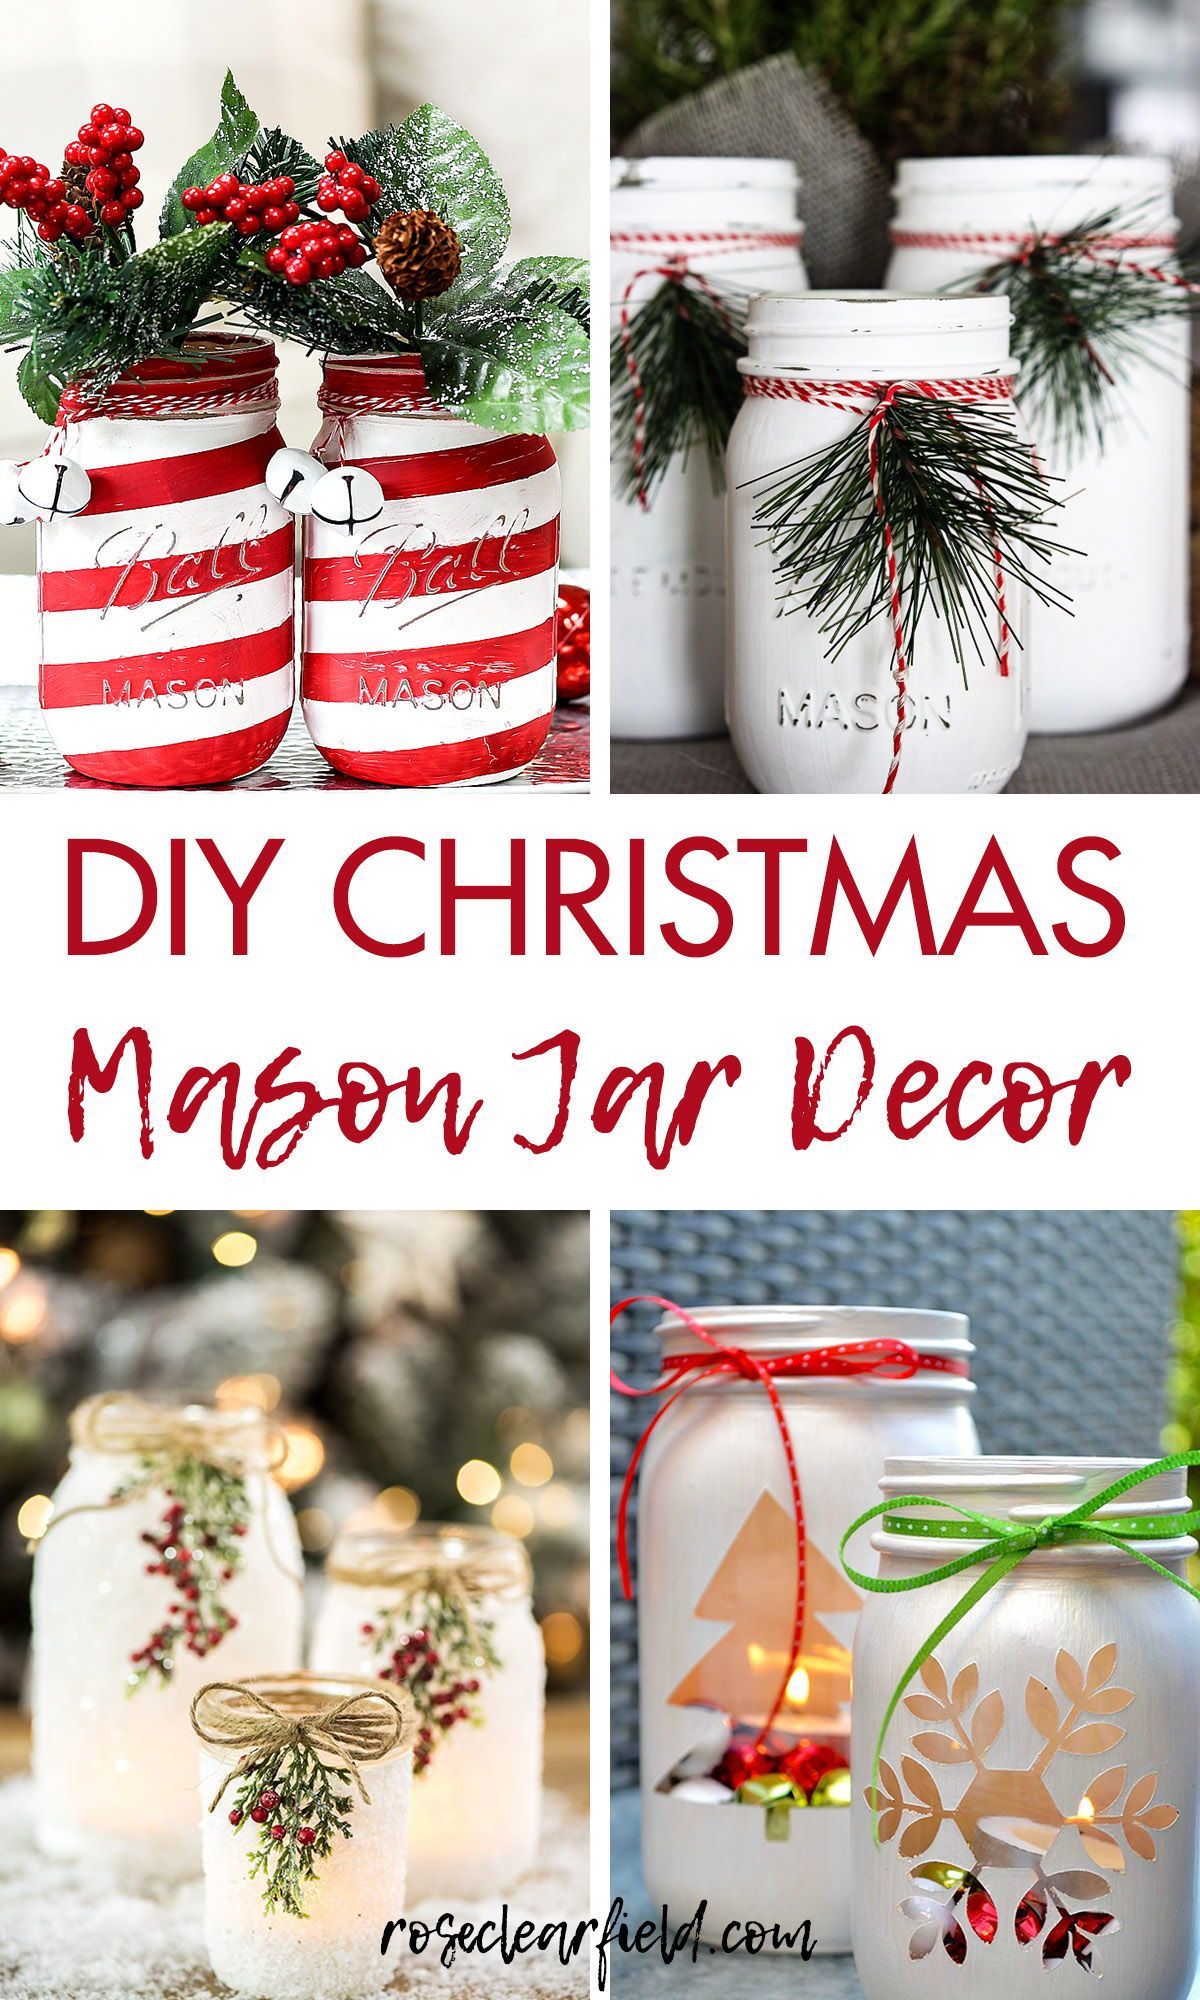 DIY Christmas Mason Jar Decor • Rose Clearfield - DIY Christmas Mason Jar Decor • Rose Clearfield -   22 diy Christmas mason jars ideas